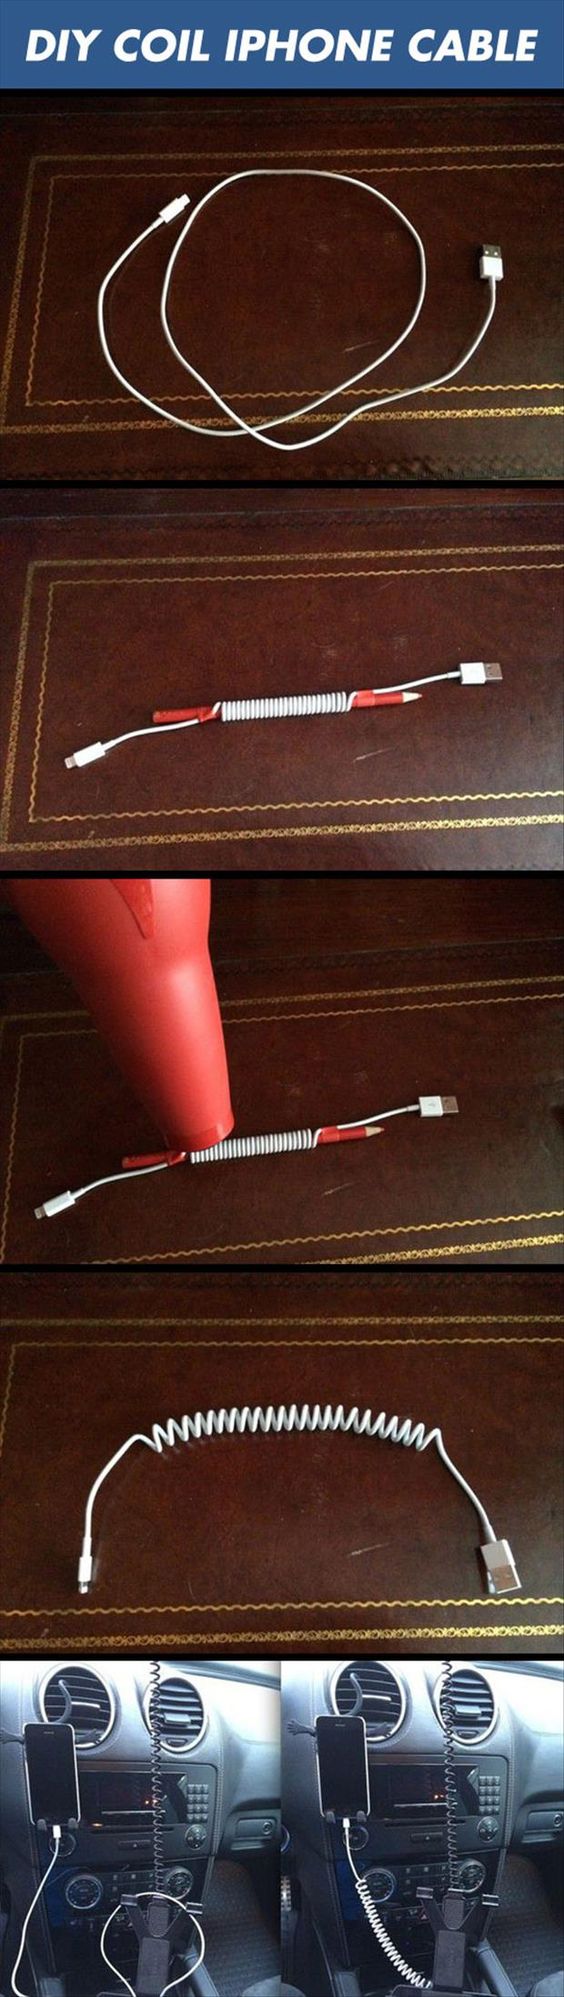 DIY coil cord